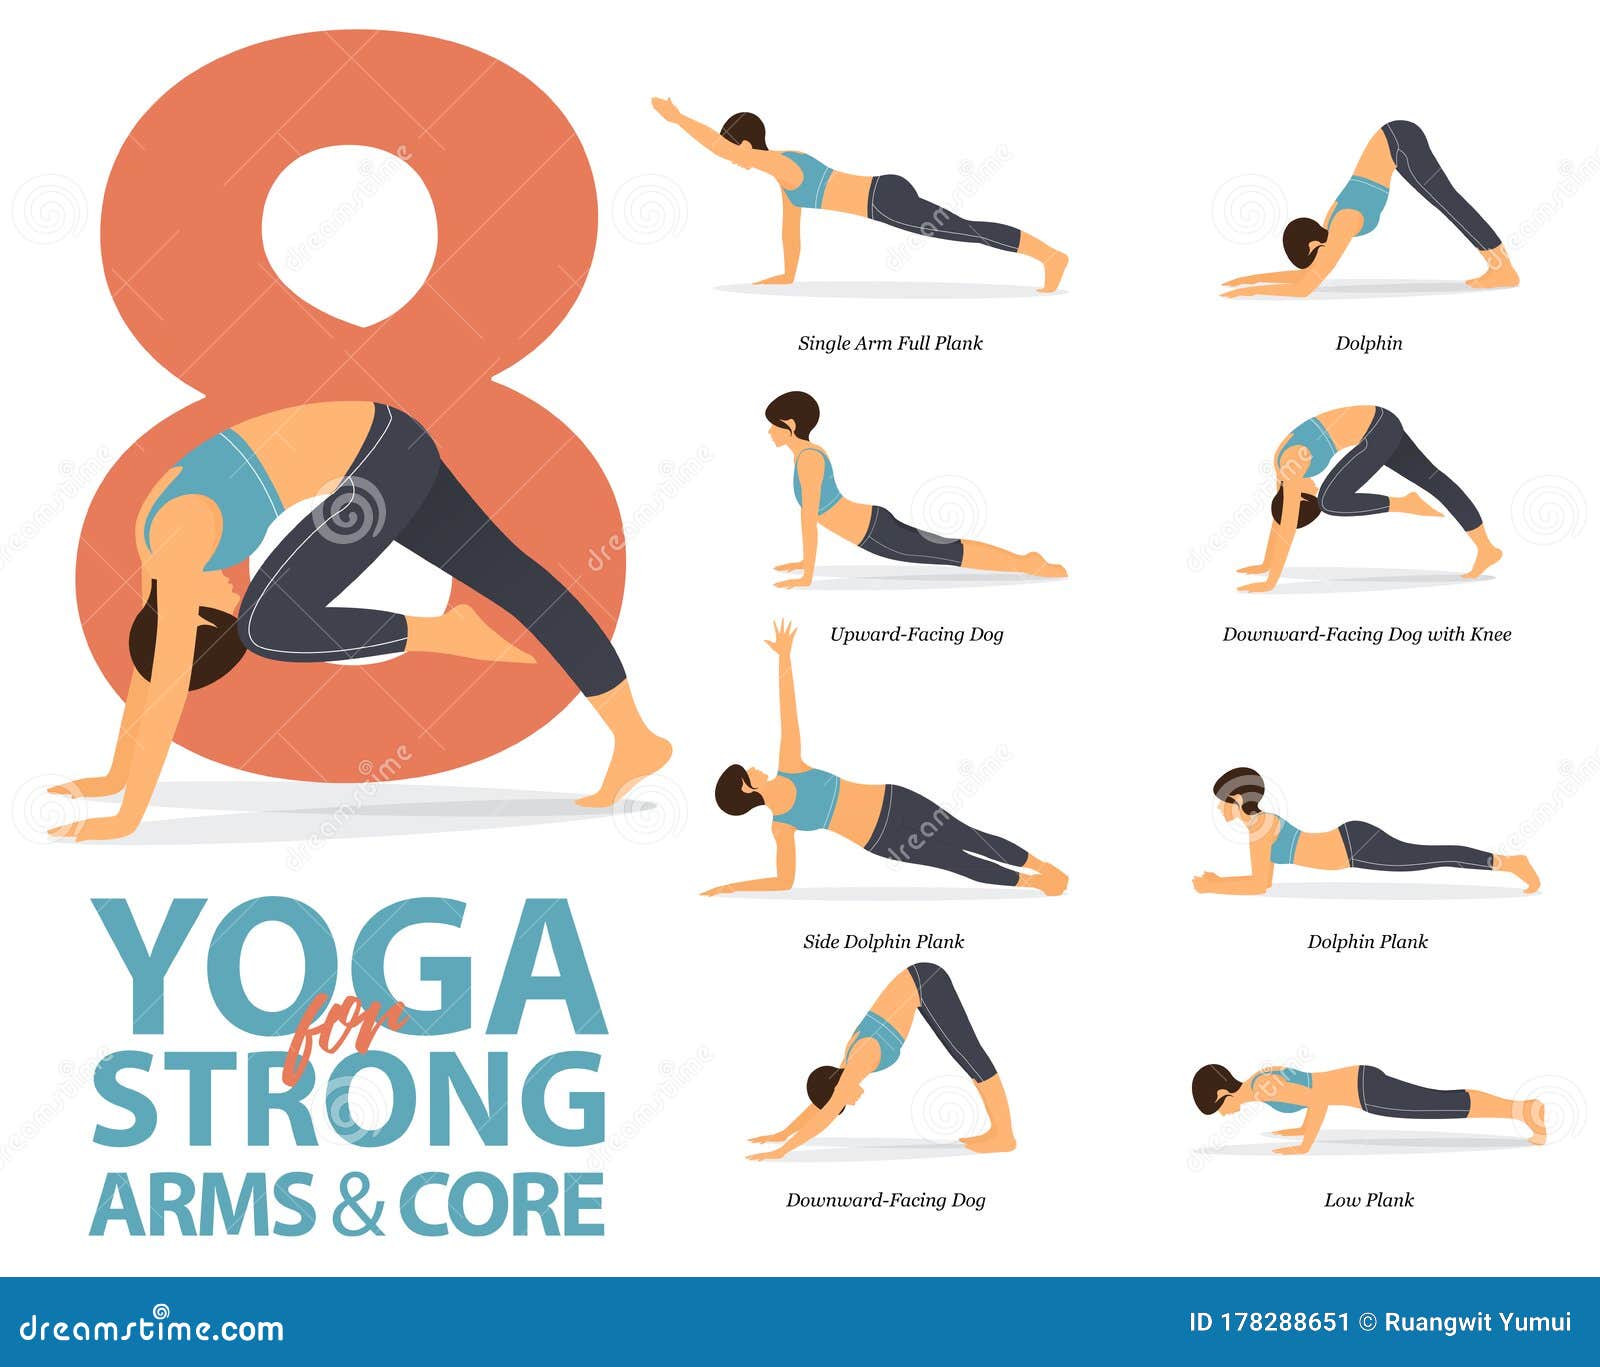 Arm Stretches: For Flexibility